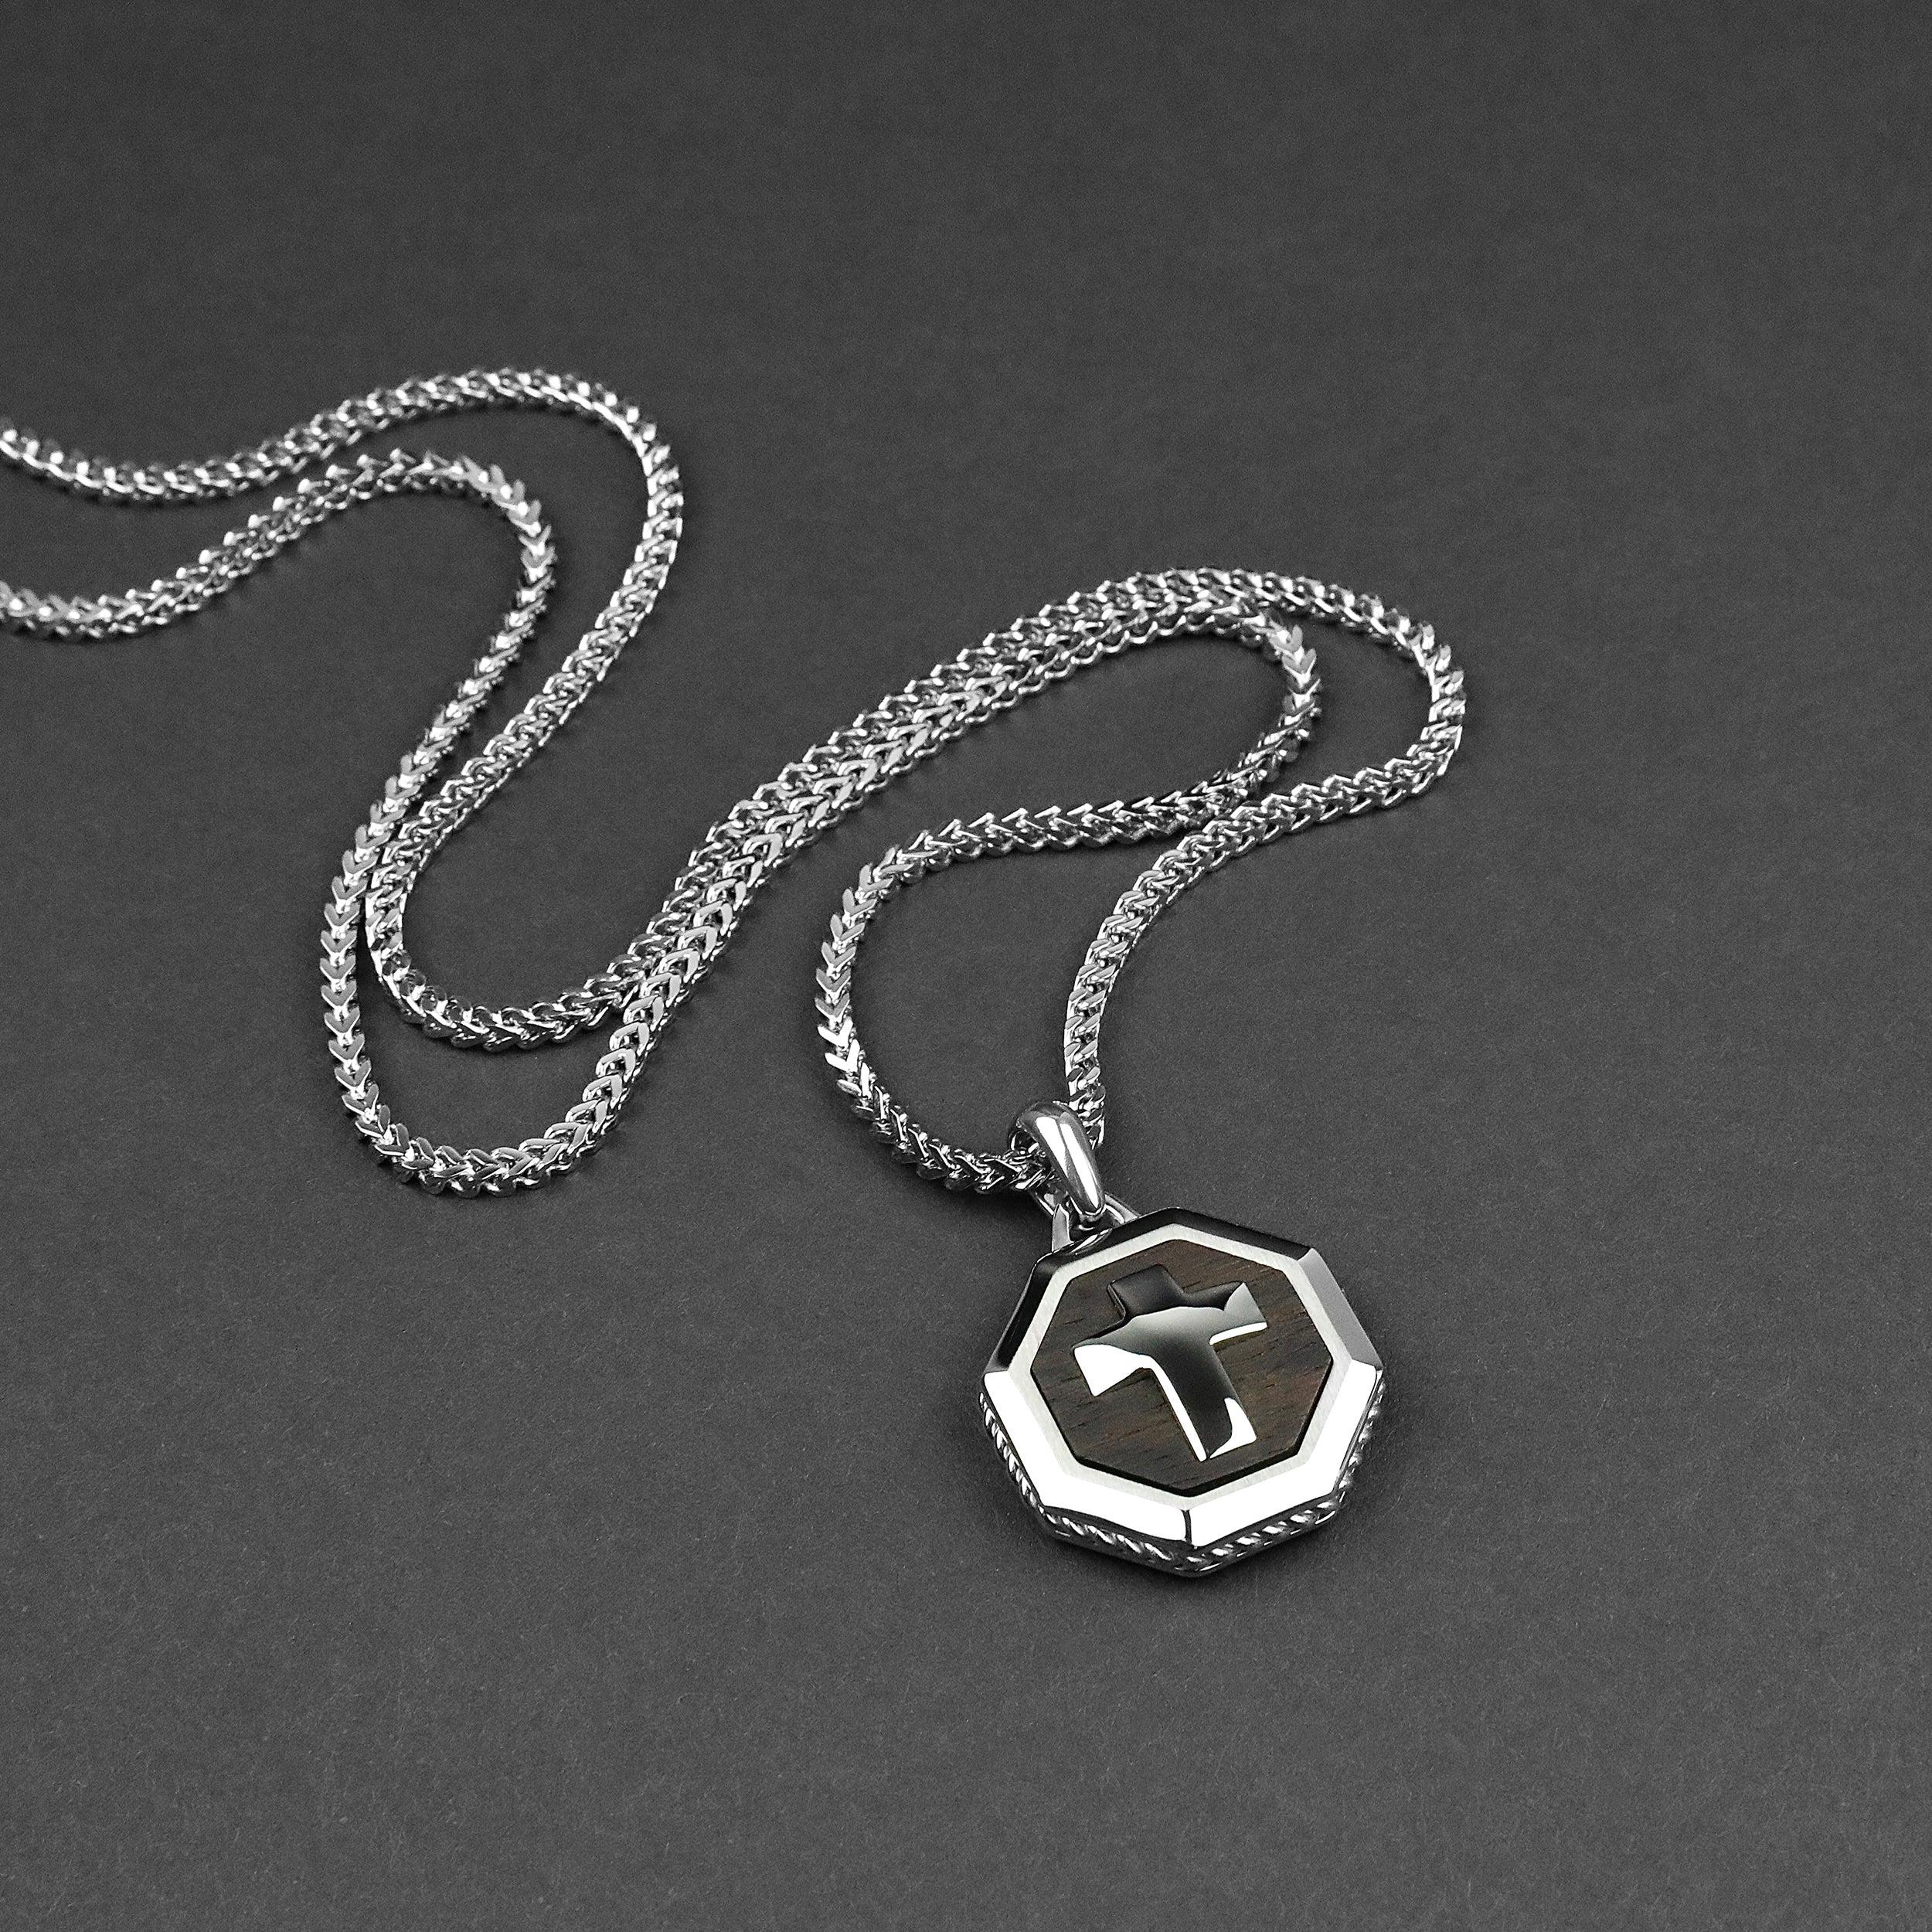 Ebony Wood Brim Cross Necklace - Silver